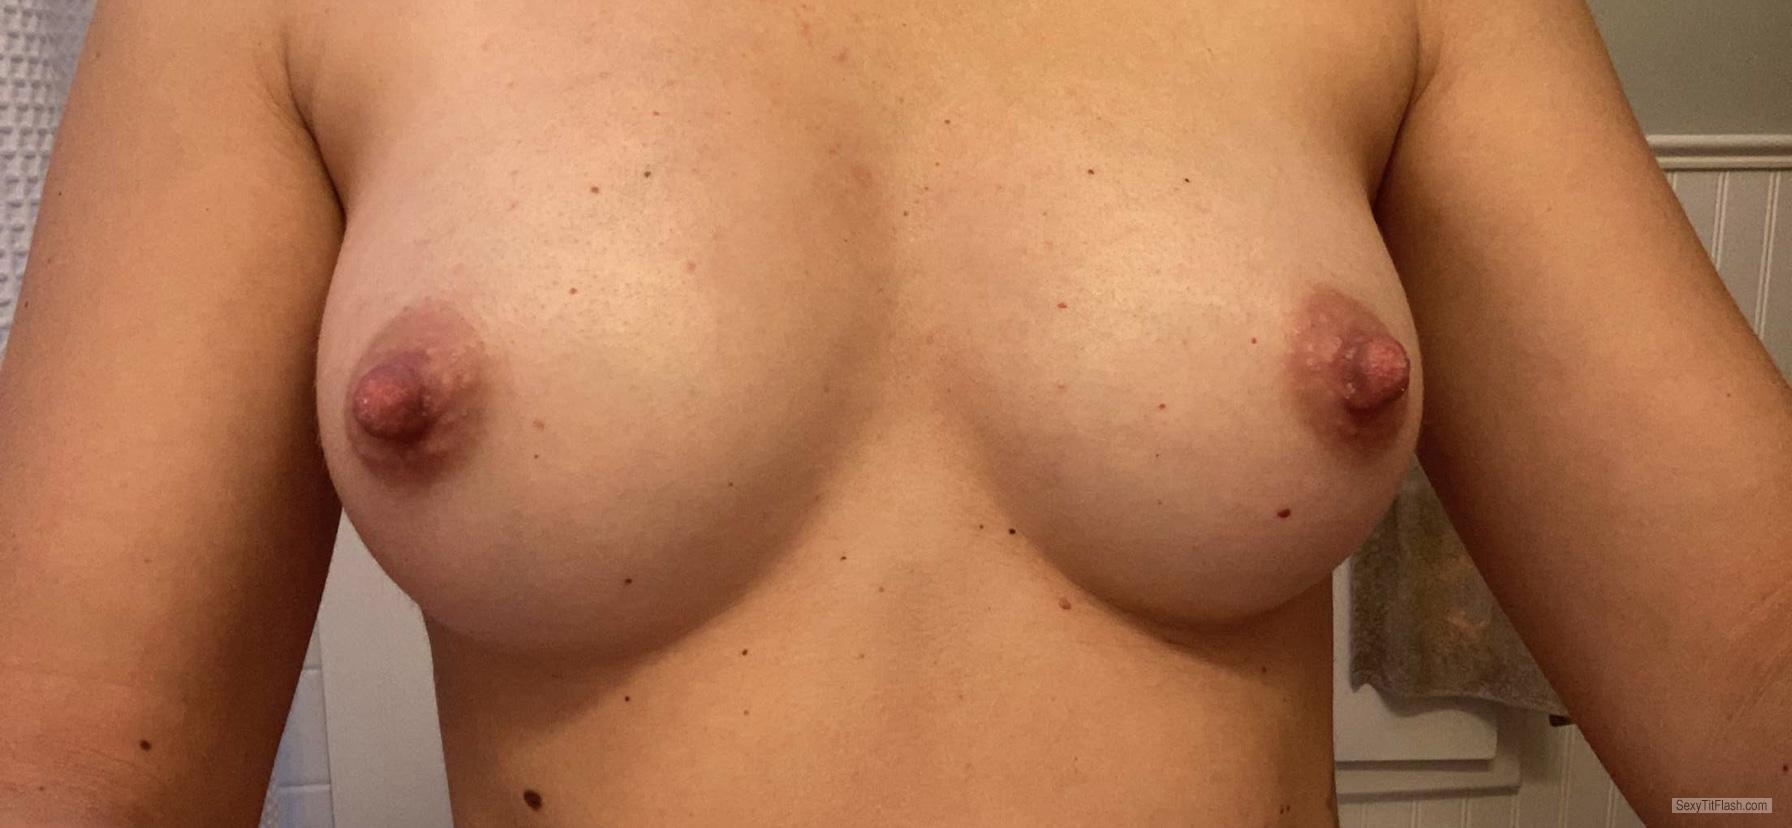 Tit Flash: My Big Tits (Selfie) - Prego Tits from United States